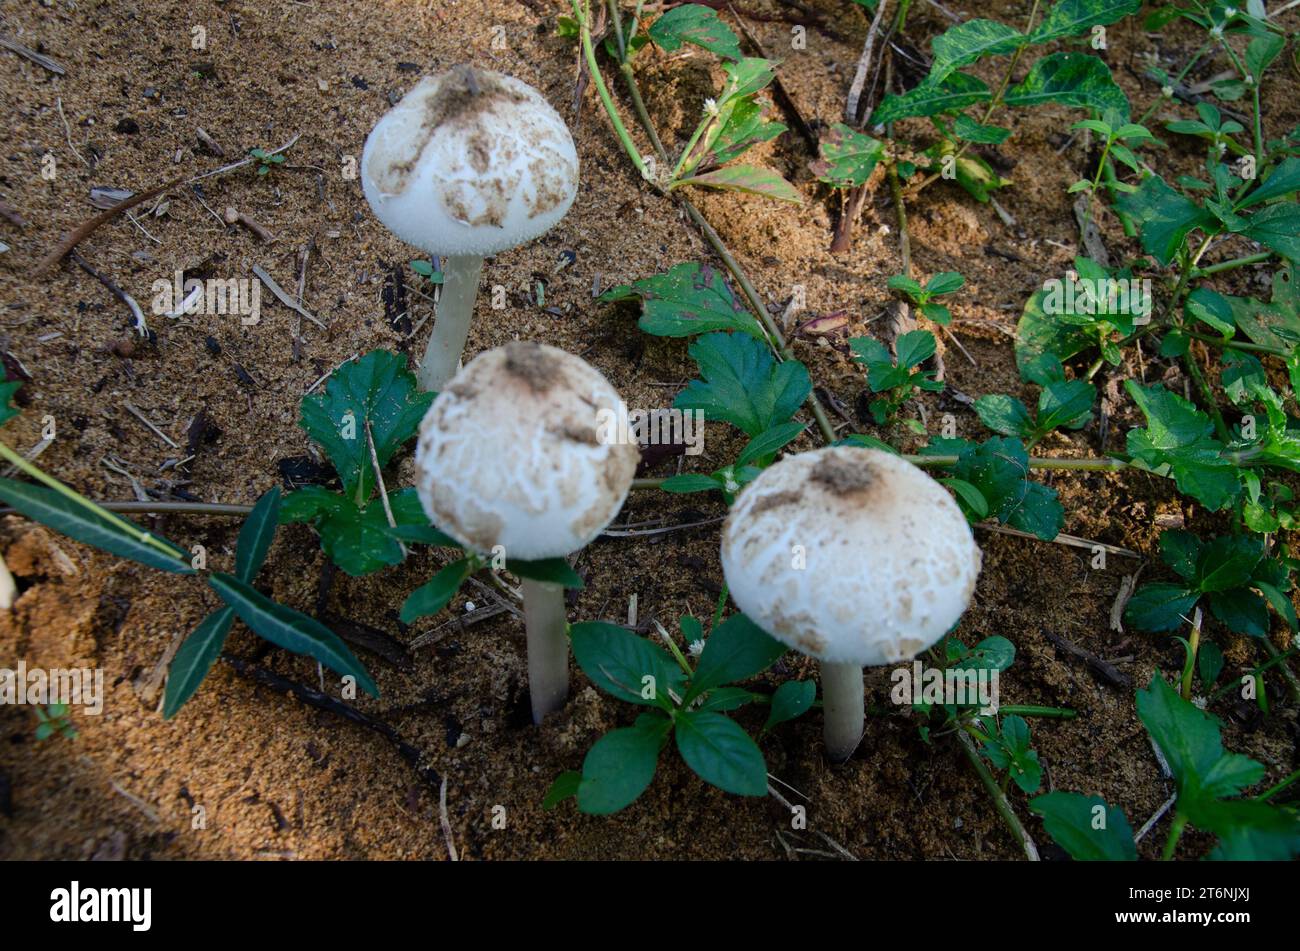 Chlorophyllum molybdites (Belly of the world) mushrooms Stock Photo